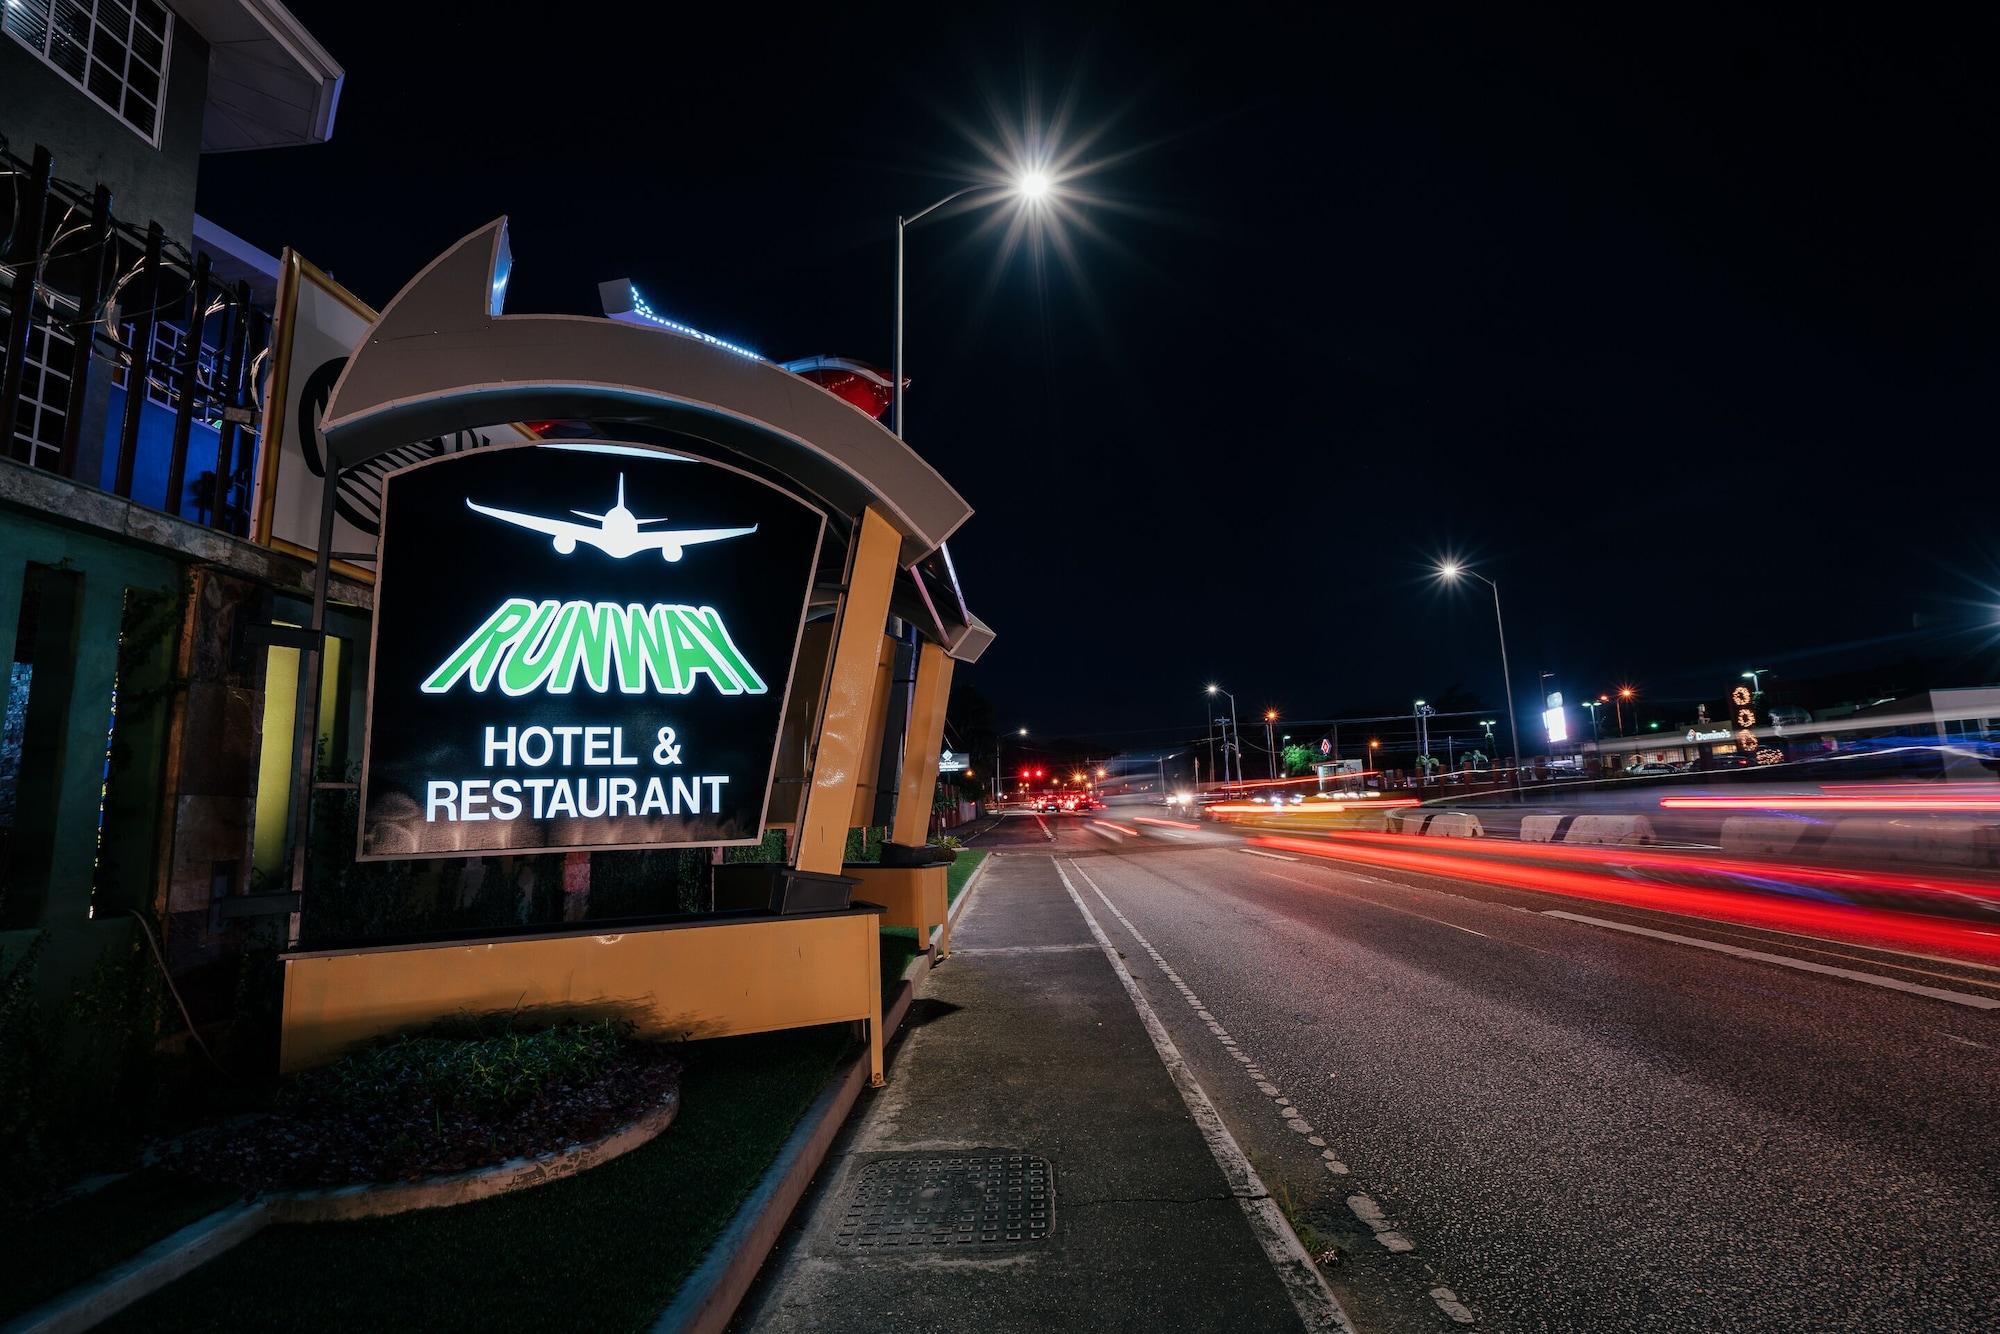 Runway Hotel and Restaurant image